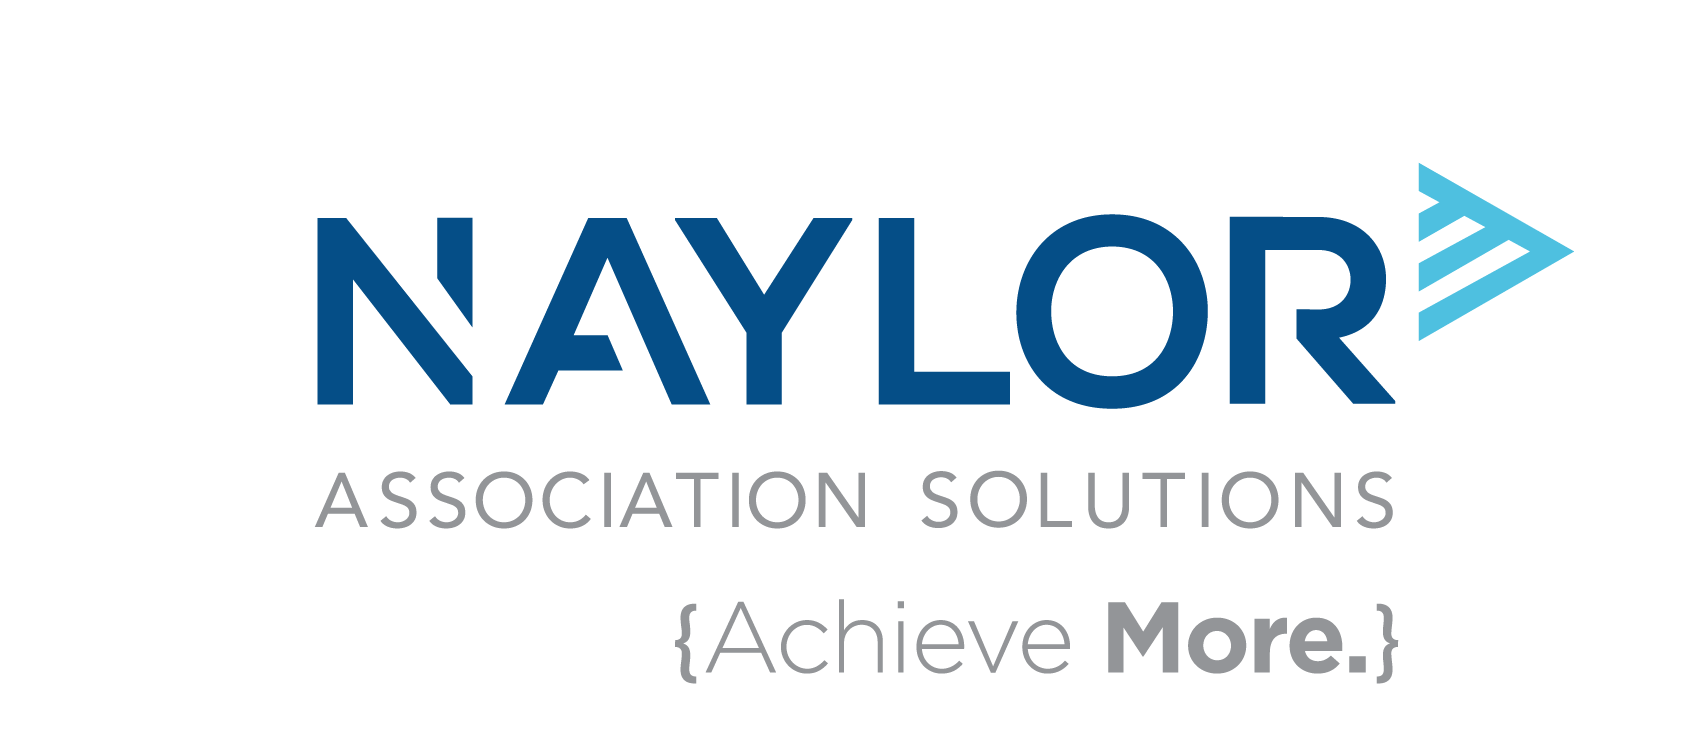 Naylor Association Solutions logo